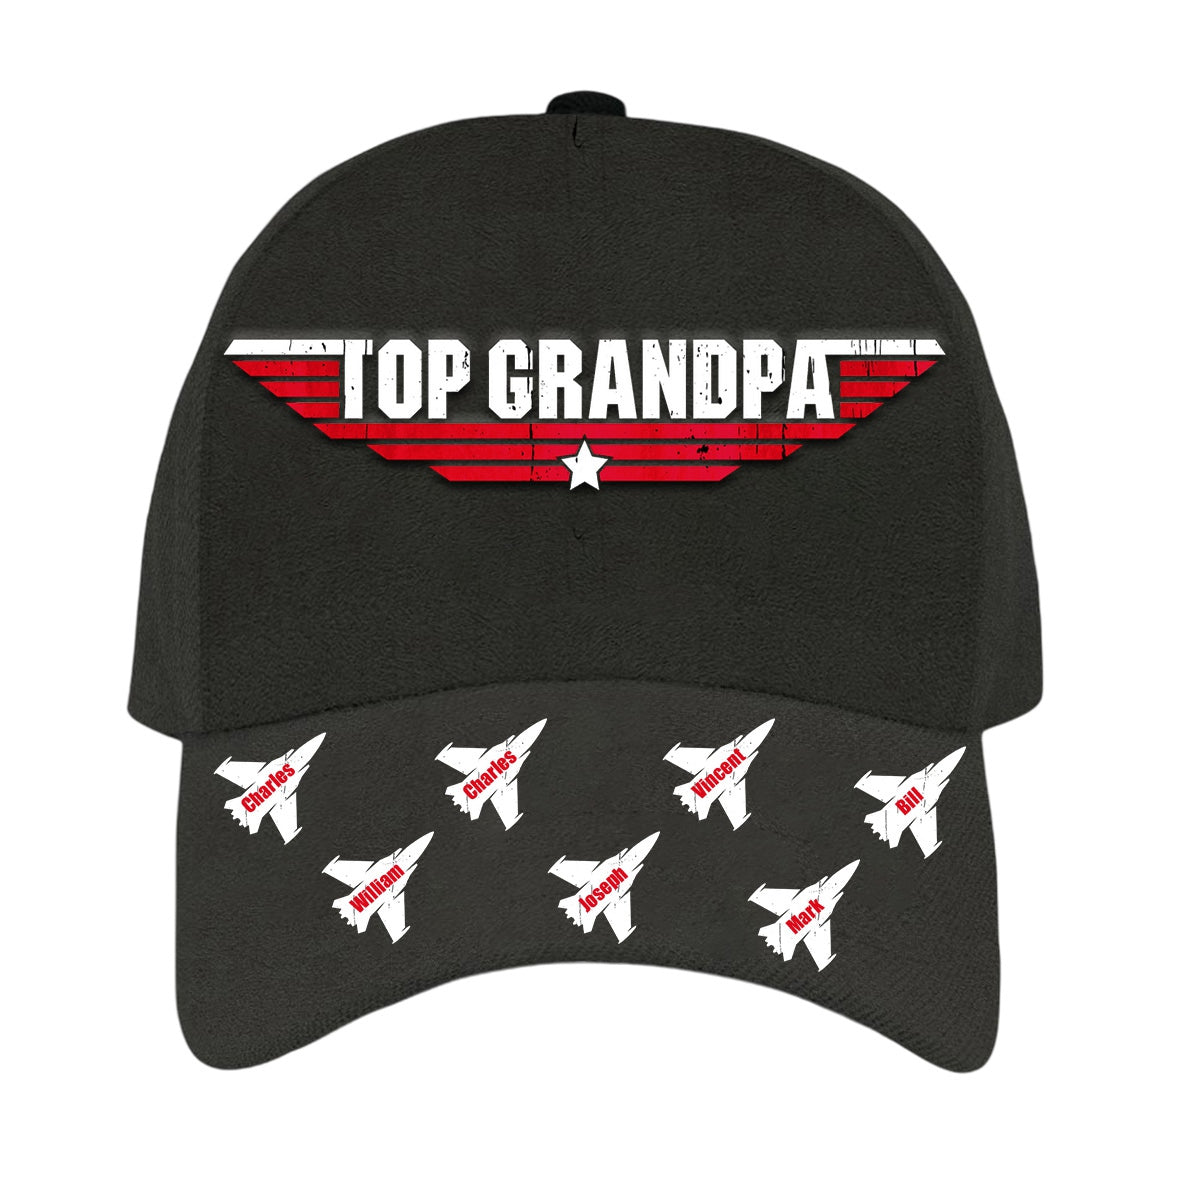 Personalized Gift Top Grandpa Cap